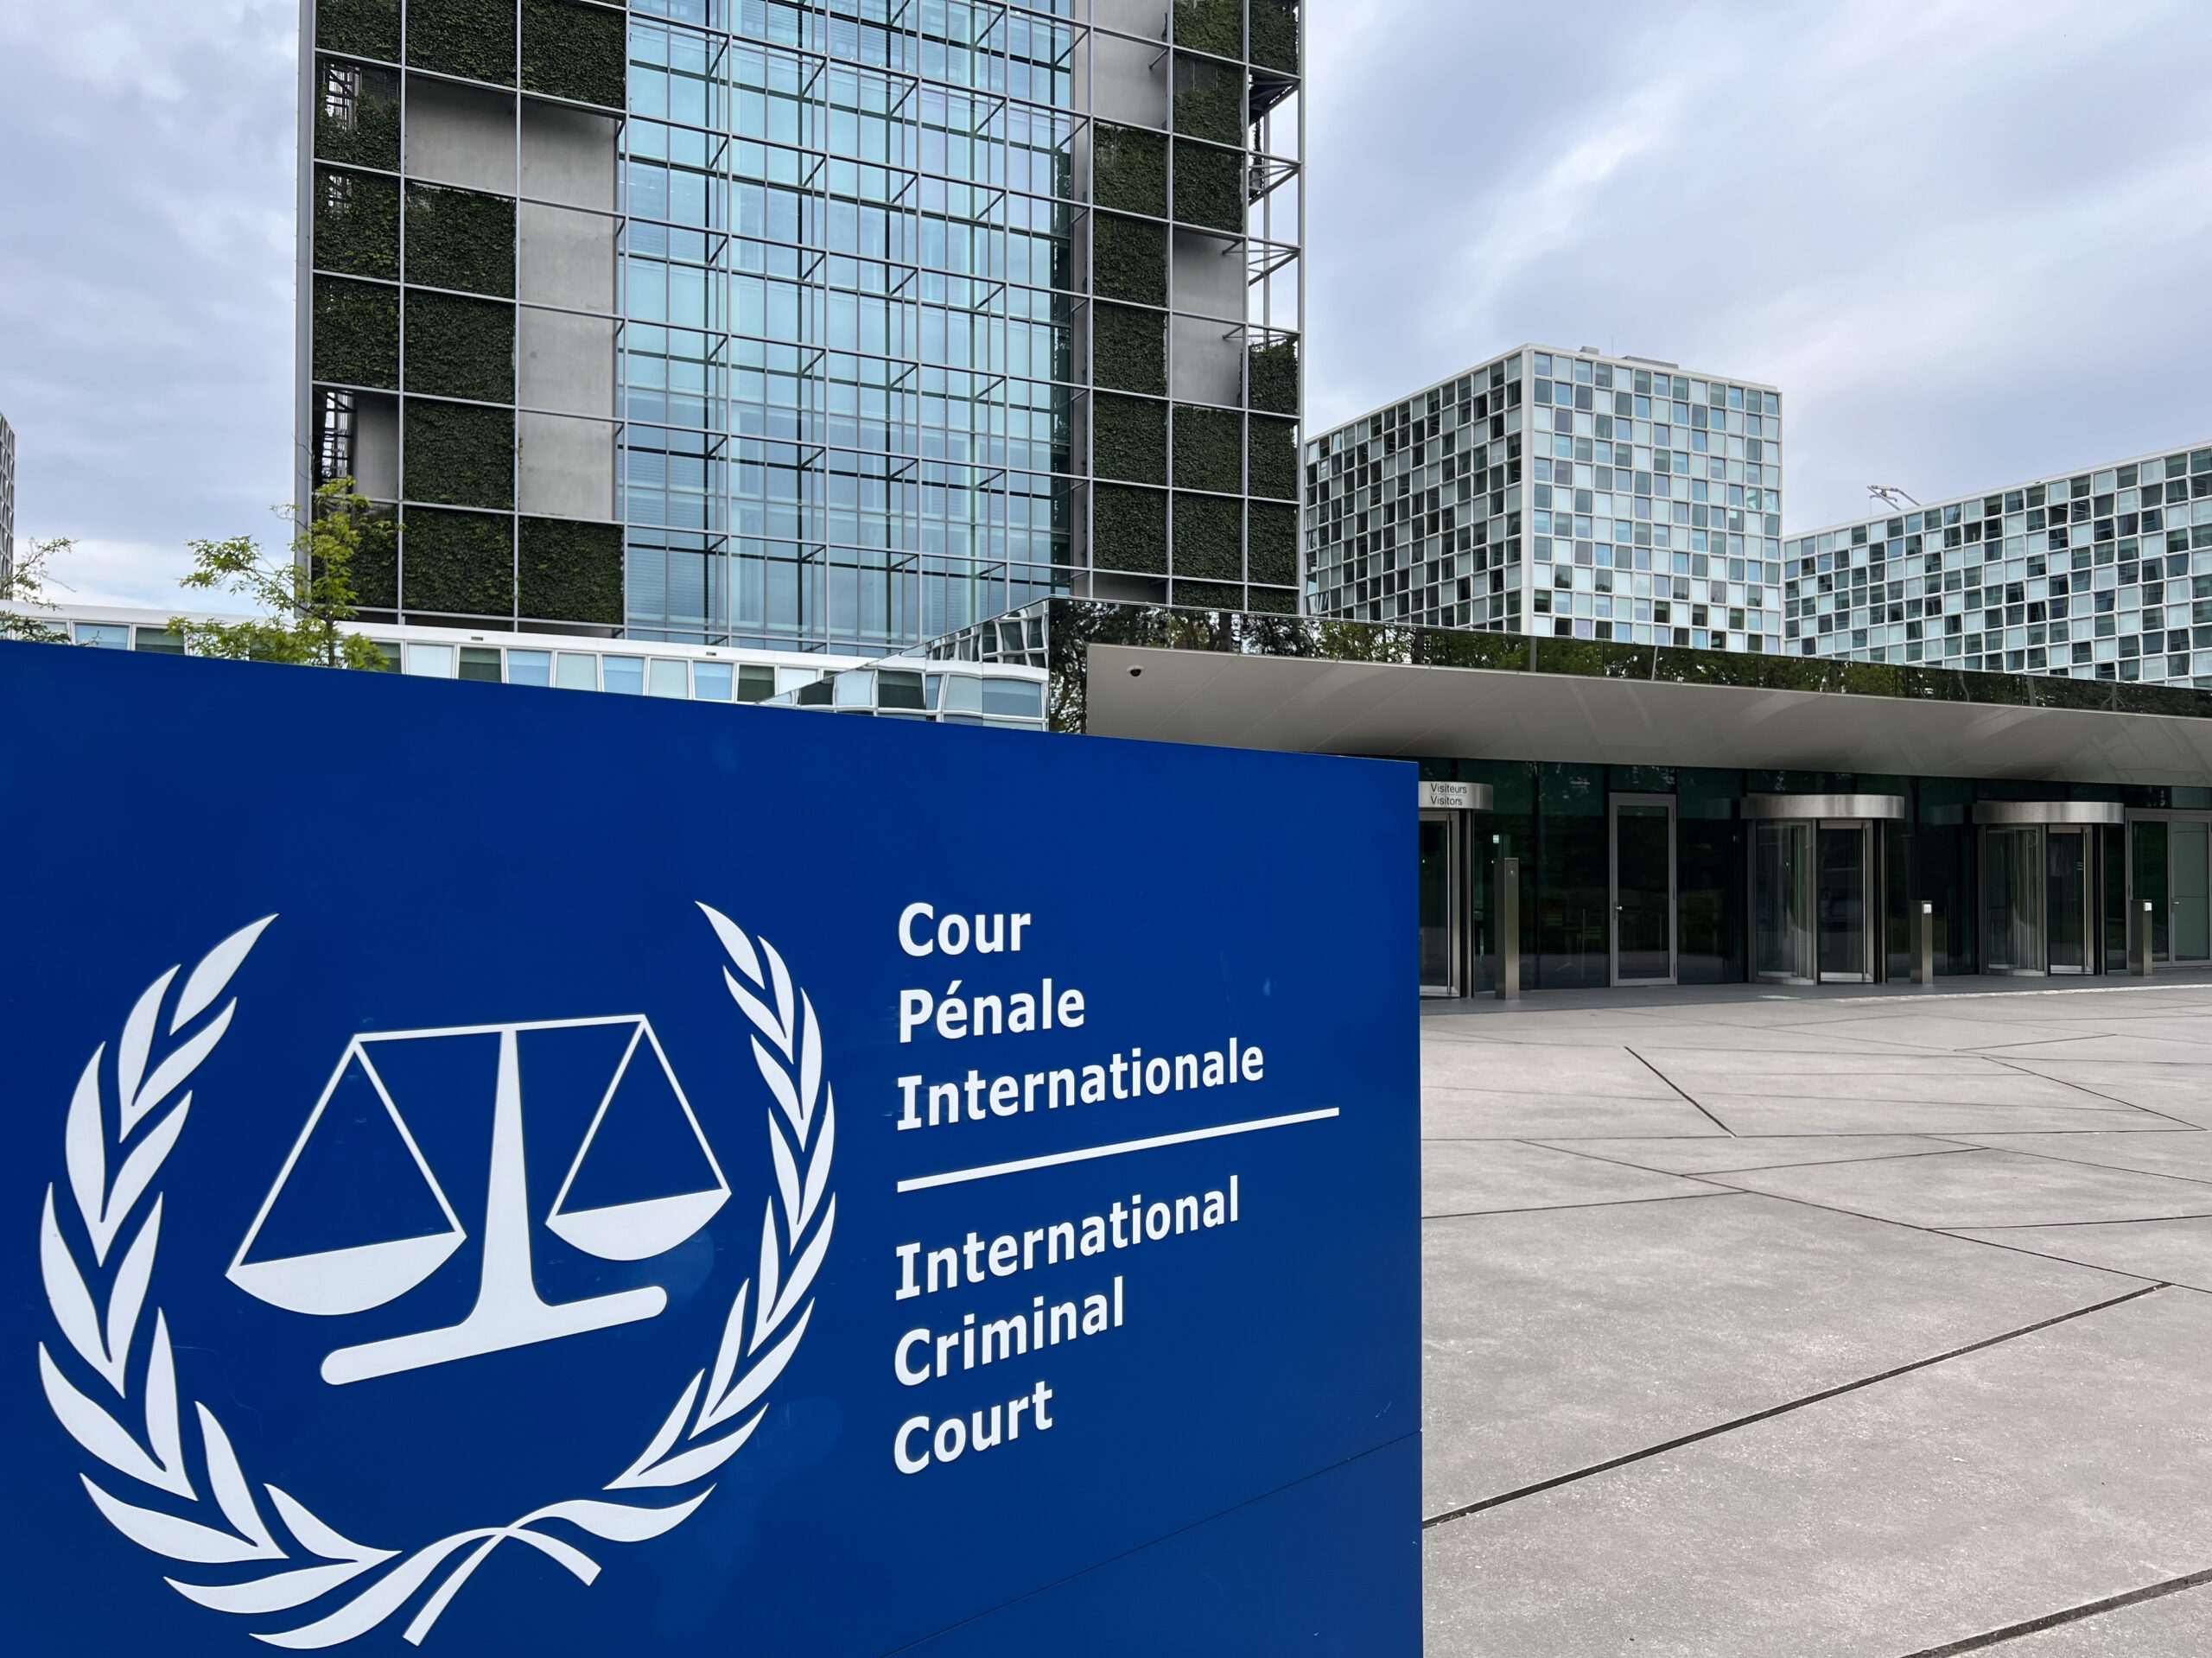 The International Criminal Court is seeking warrants for Israeli and Hamas leaders